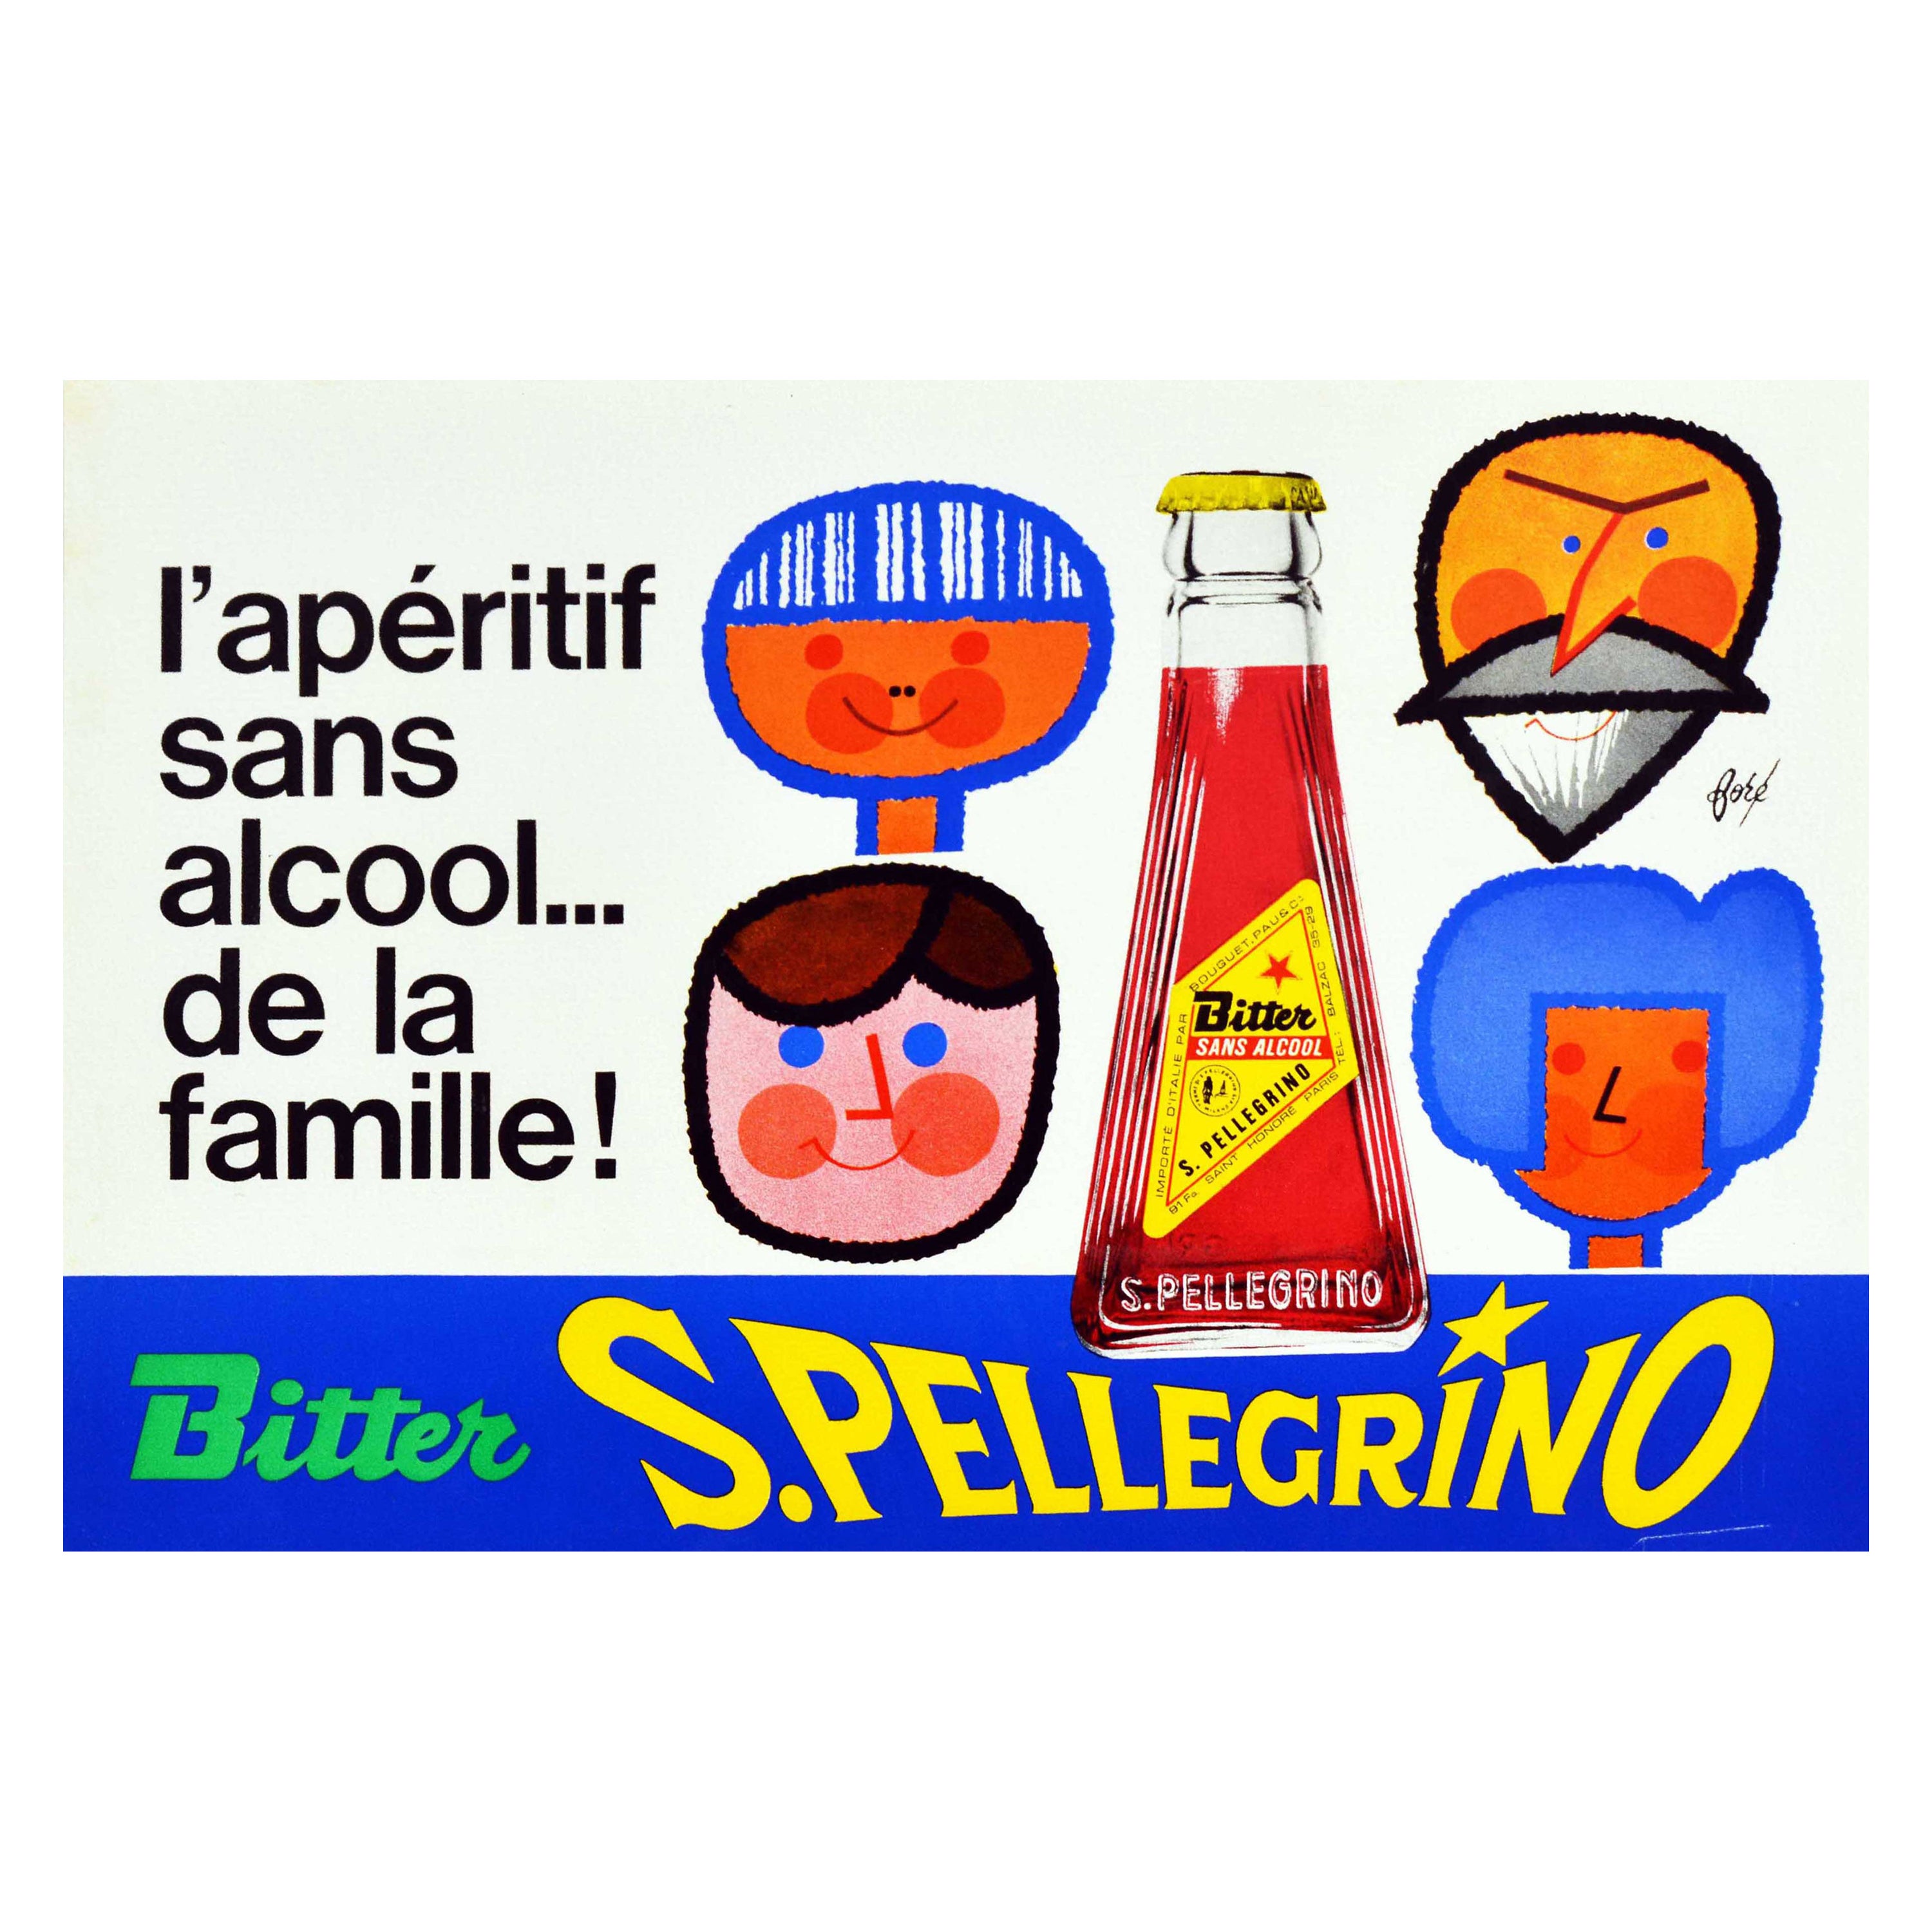 Original-Vintage-Getränkeplakat San Pellegrino Bitter Alcohol Freies Familien-Aperitif